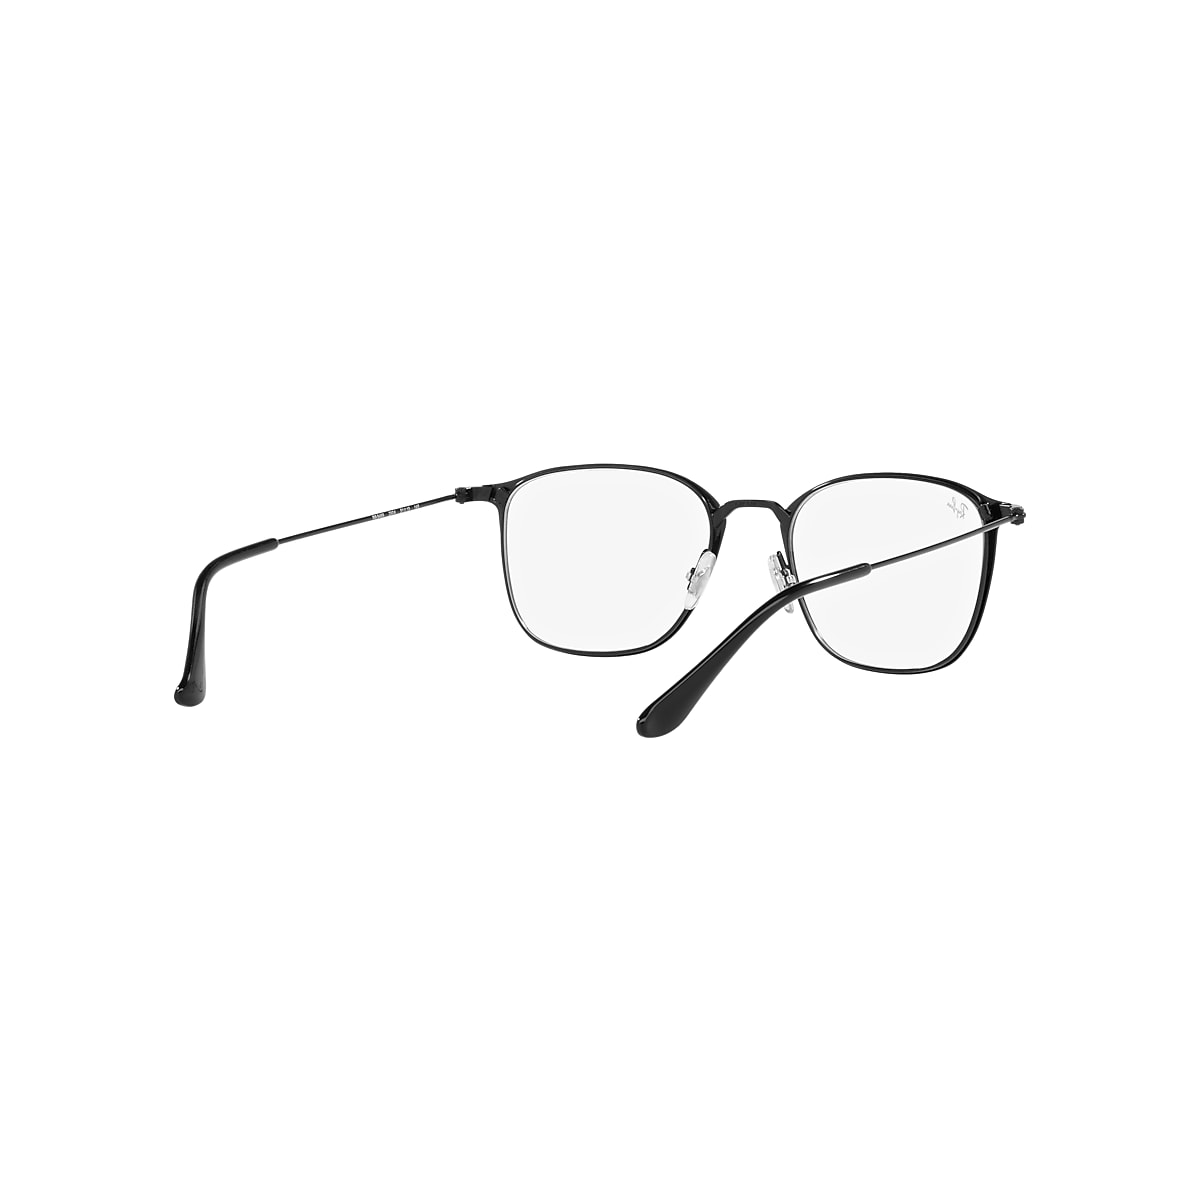 RB6466 OPTICS Eyeglasses with Black Frame - RB6466 | Ray-Ban 